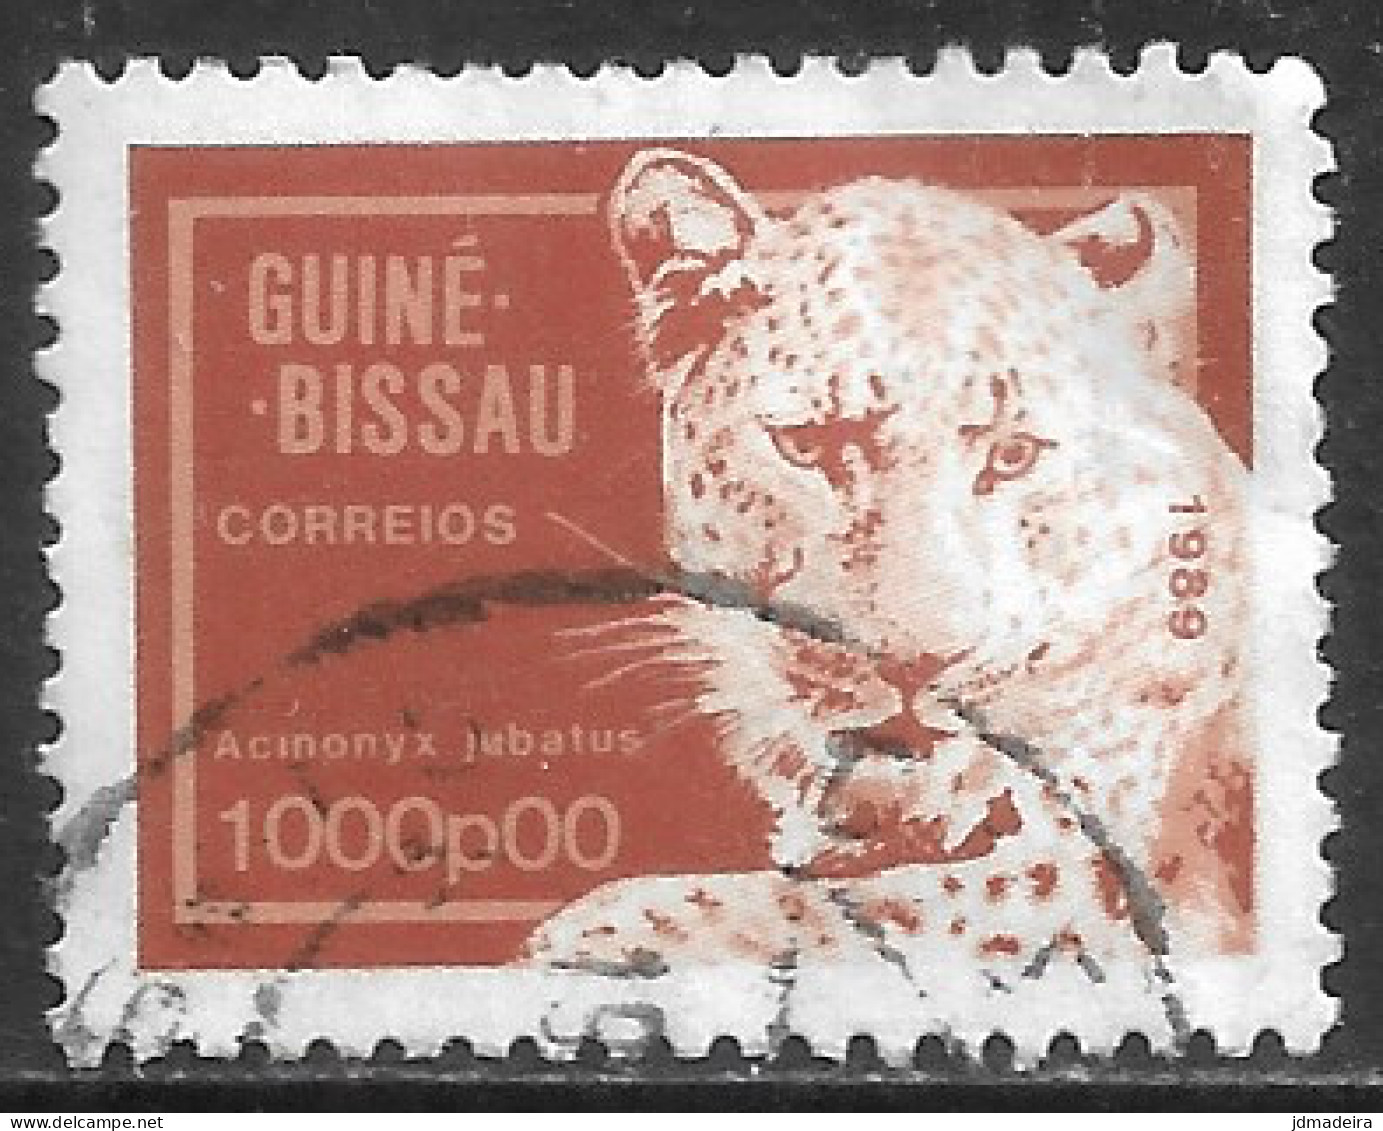 GUINE BISSAU – 1989 Animals 1000P00 Used Stamp - Guinea-Bissau